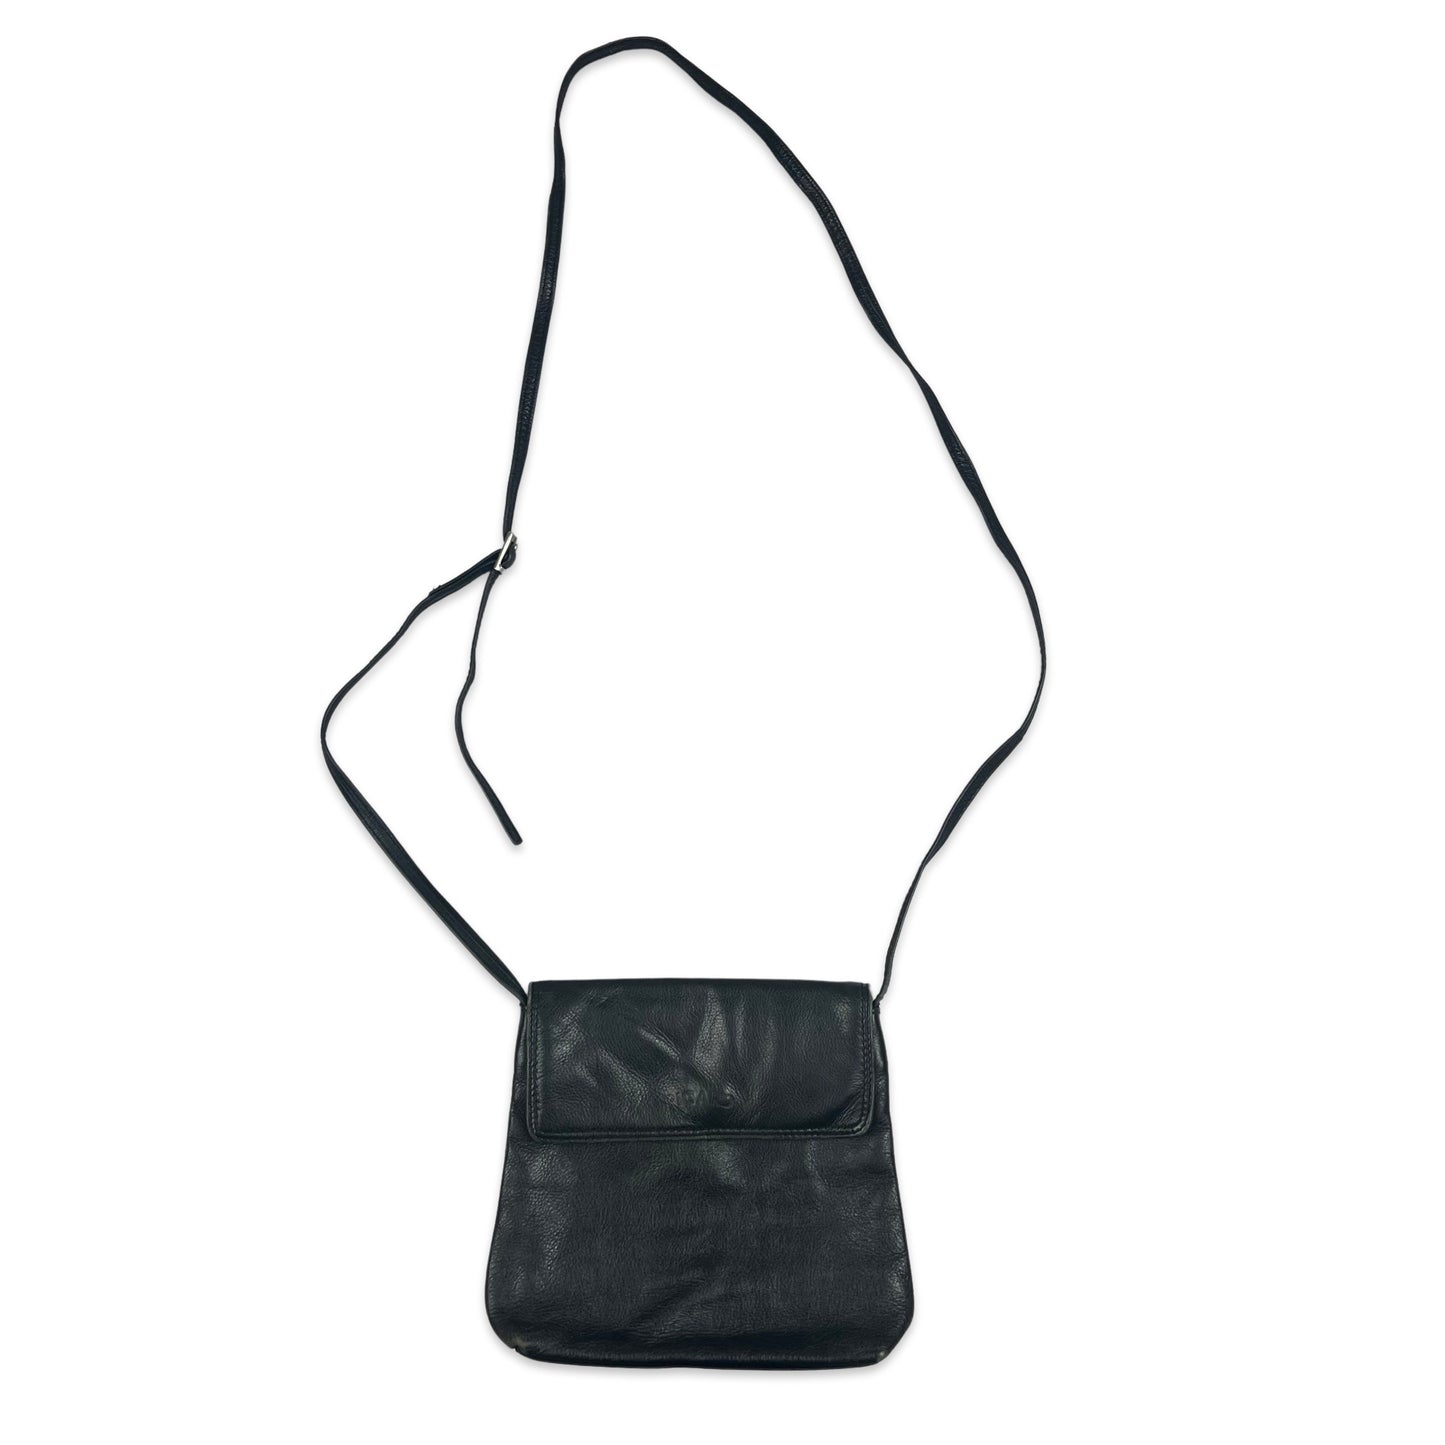 Vintage 90s Black Textured Leather Crossbody Handbag